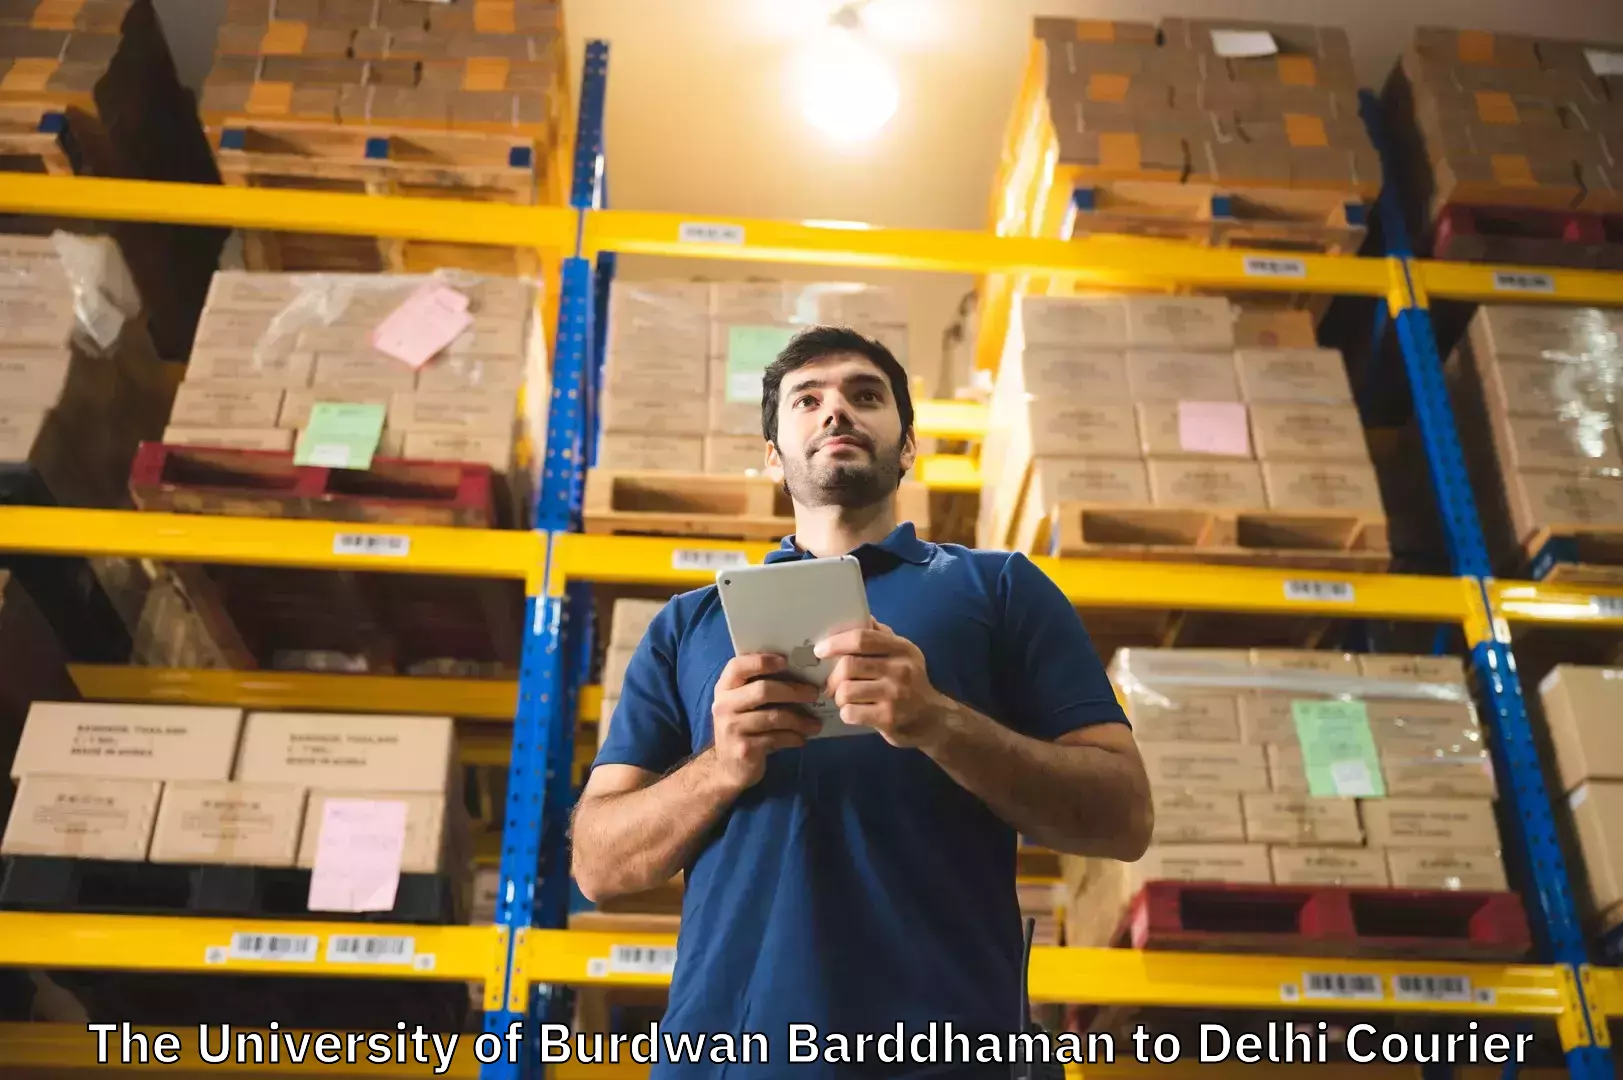 Emergency baggage service The University of Burdwan Barddhaman to IIT Delhi